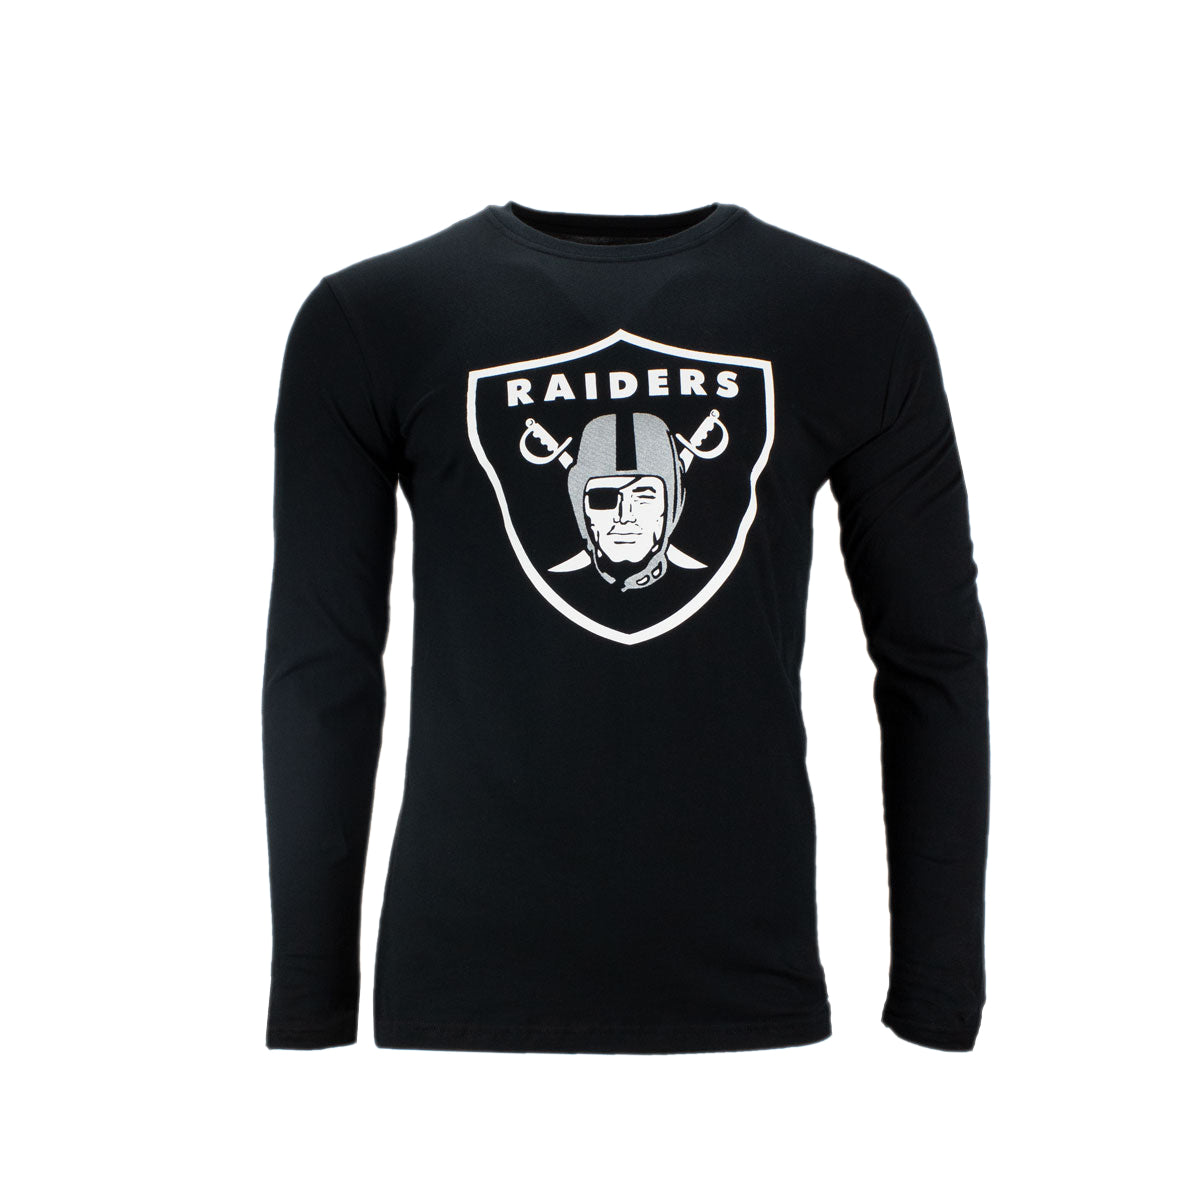 Fanatics NFL Las Vegas Oakland Raiders langarm Shirt Herren 1568MBLK1ADORA XL